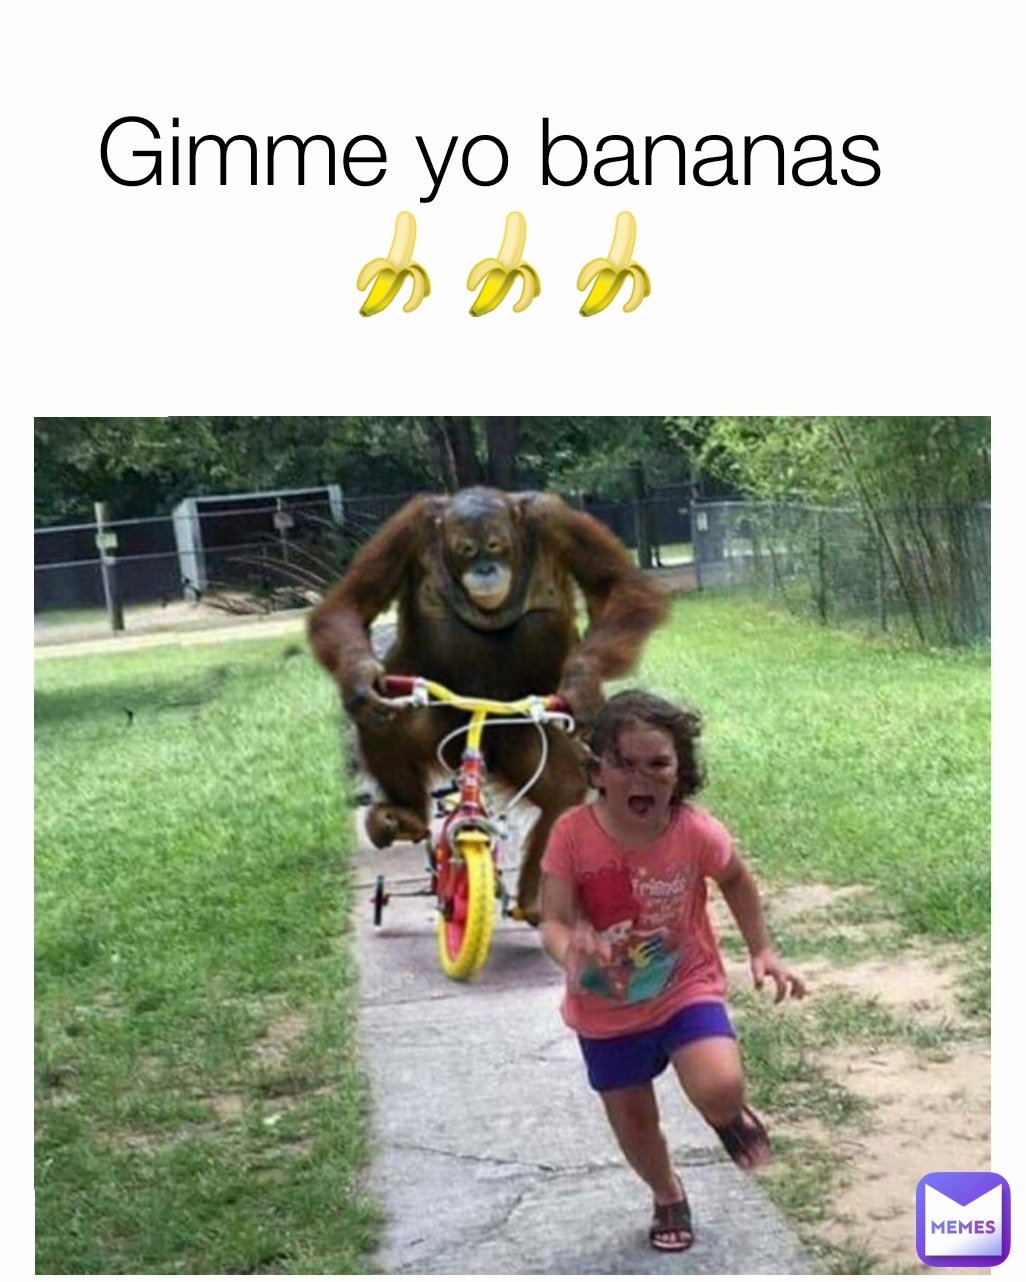 Gimme yo bananas 
🍌🍌🍌